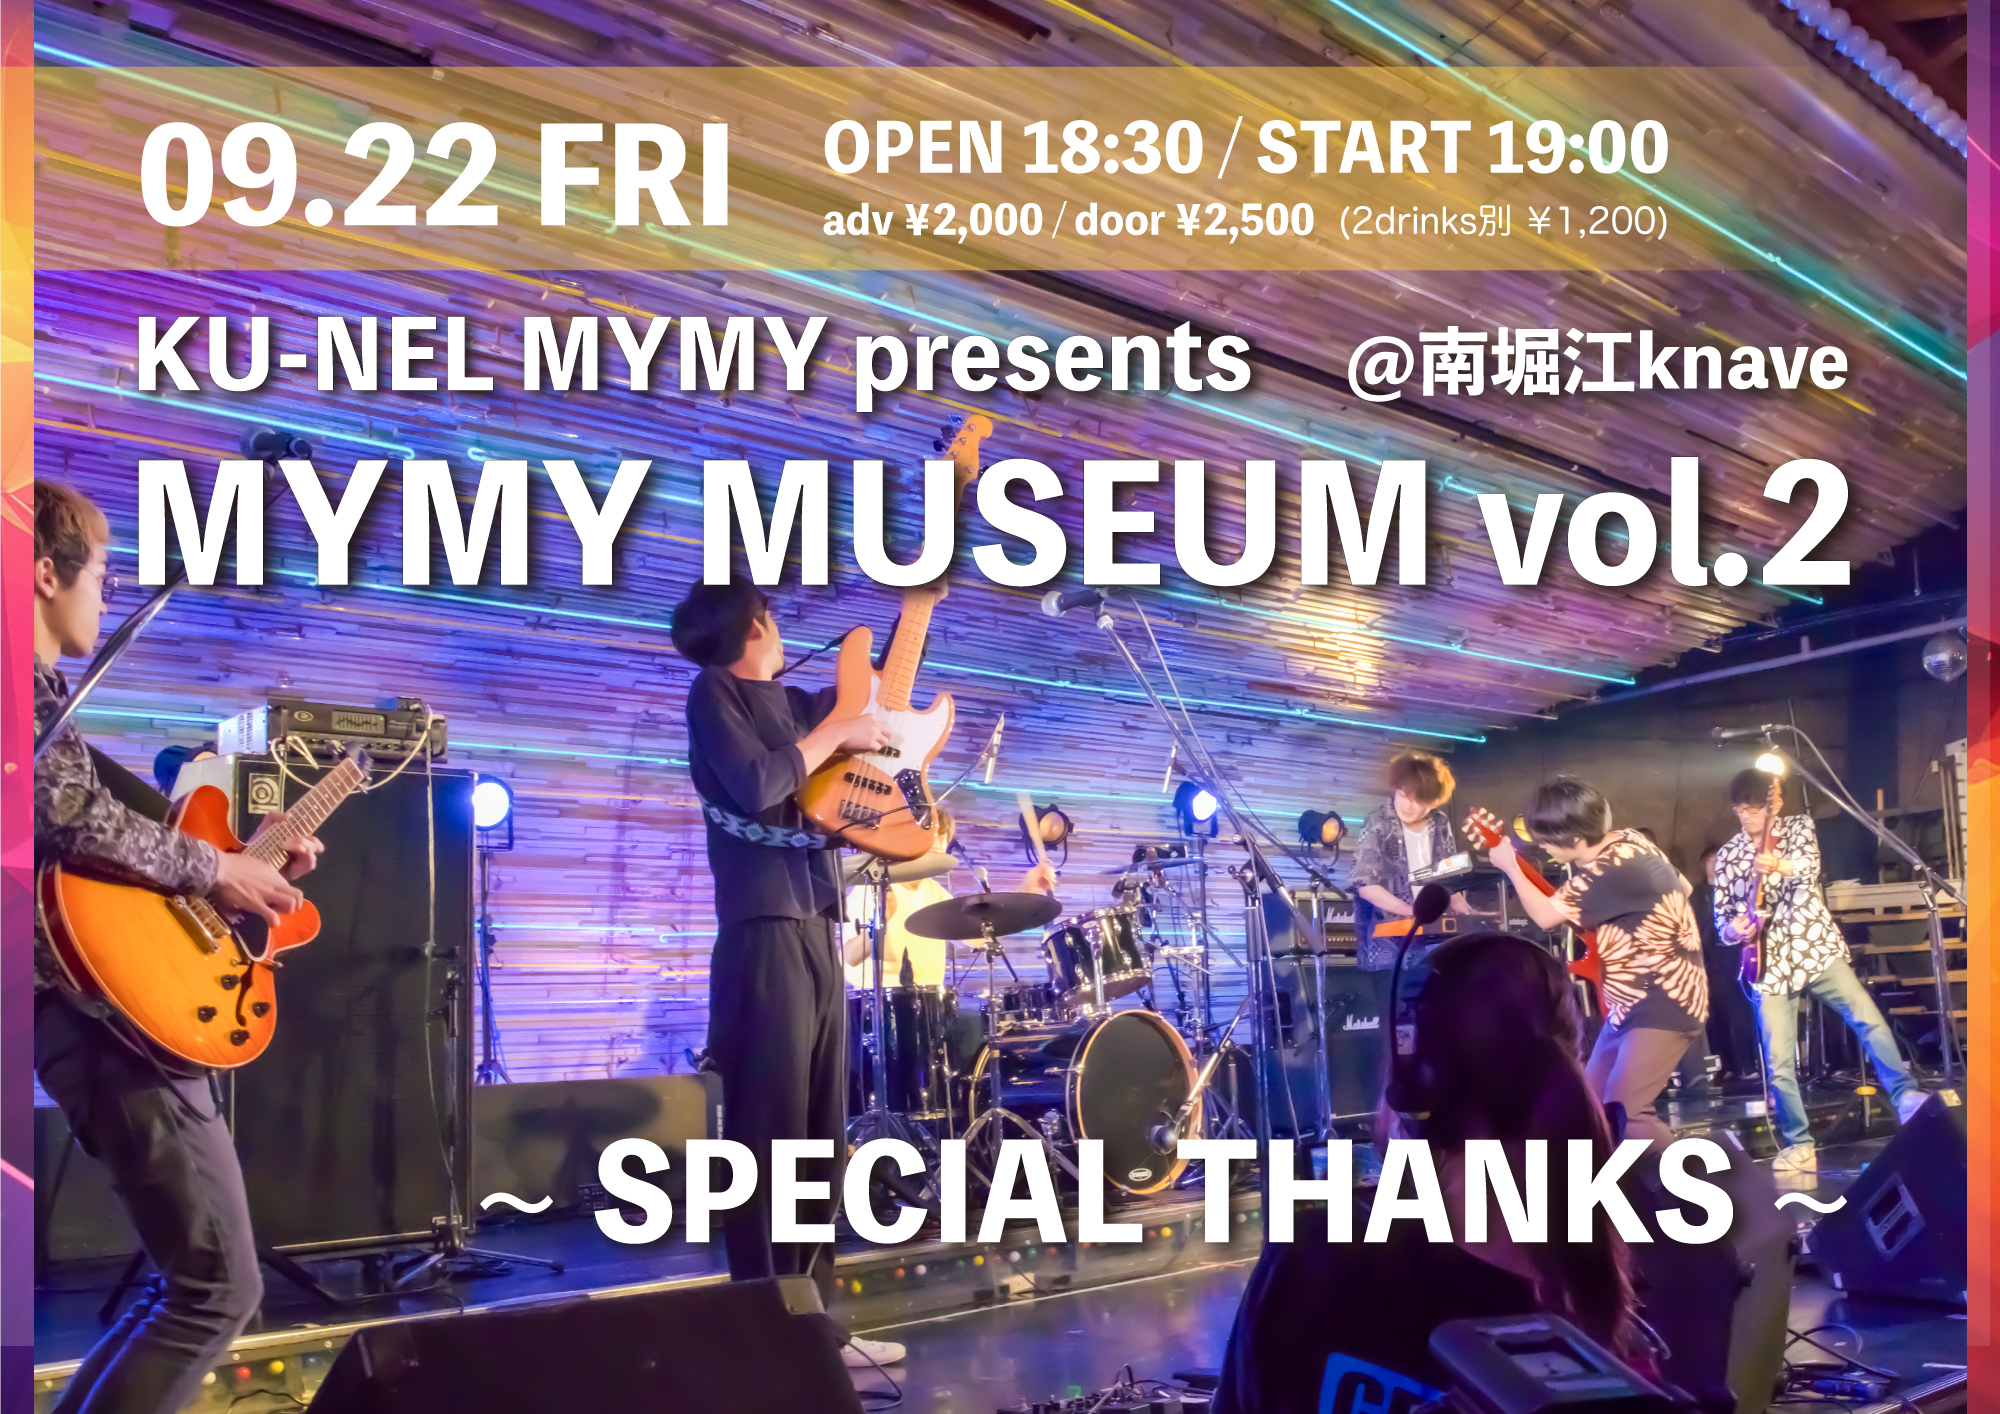 KU-NEL MYMY presents MYMY MUSEUM vol.2 SPECIAL THANKS